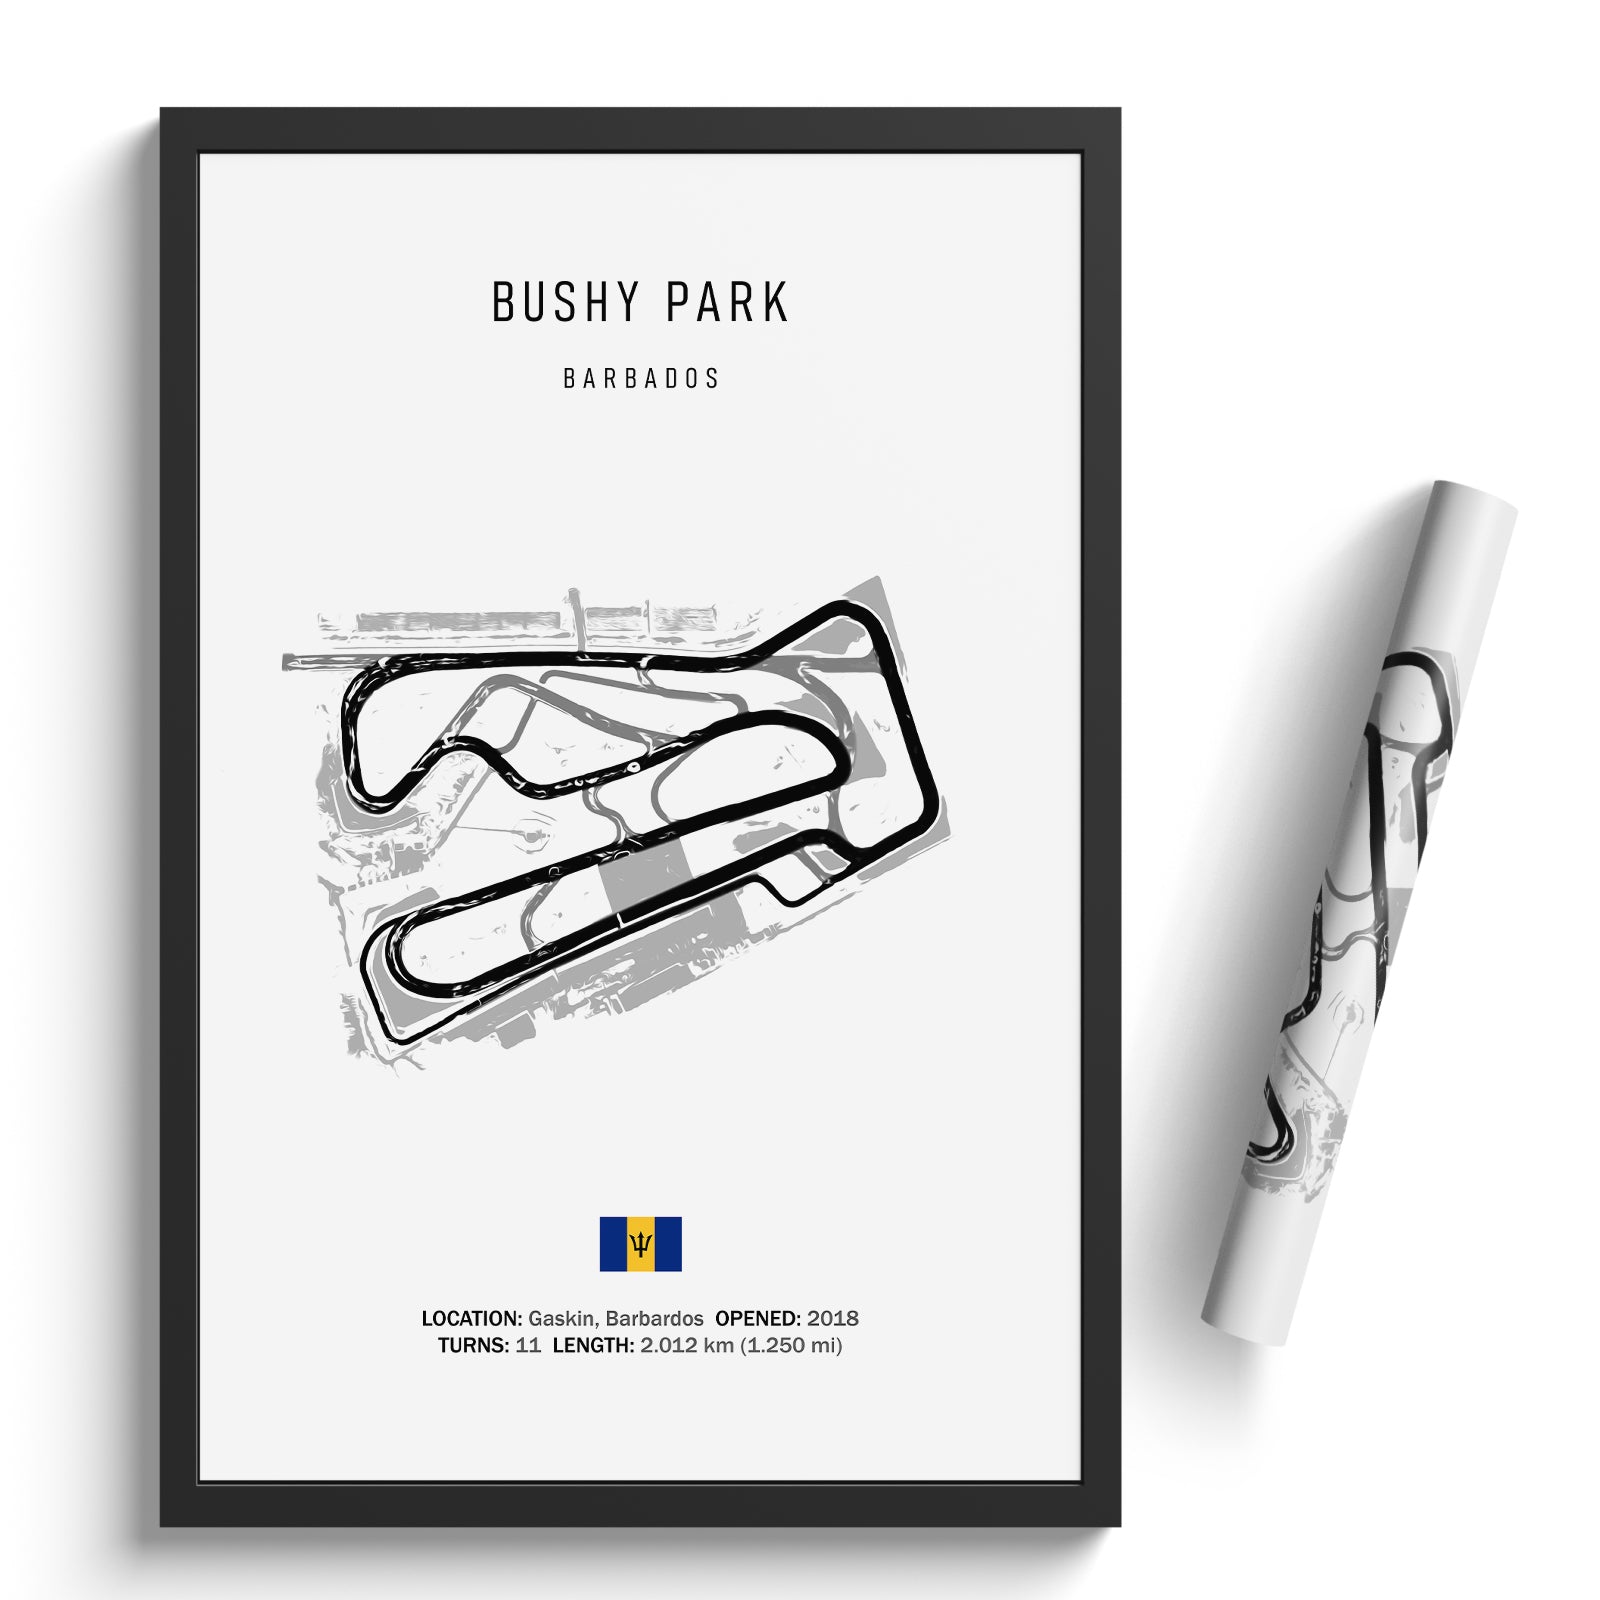 Bushy Park - Racetrack Poster Print